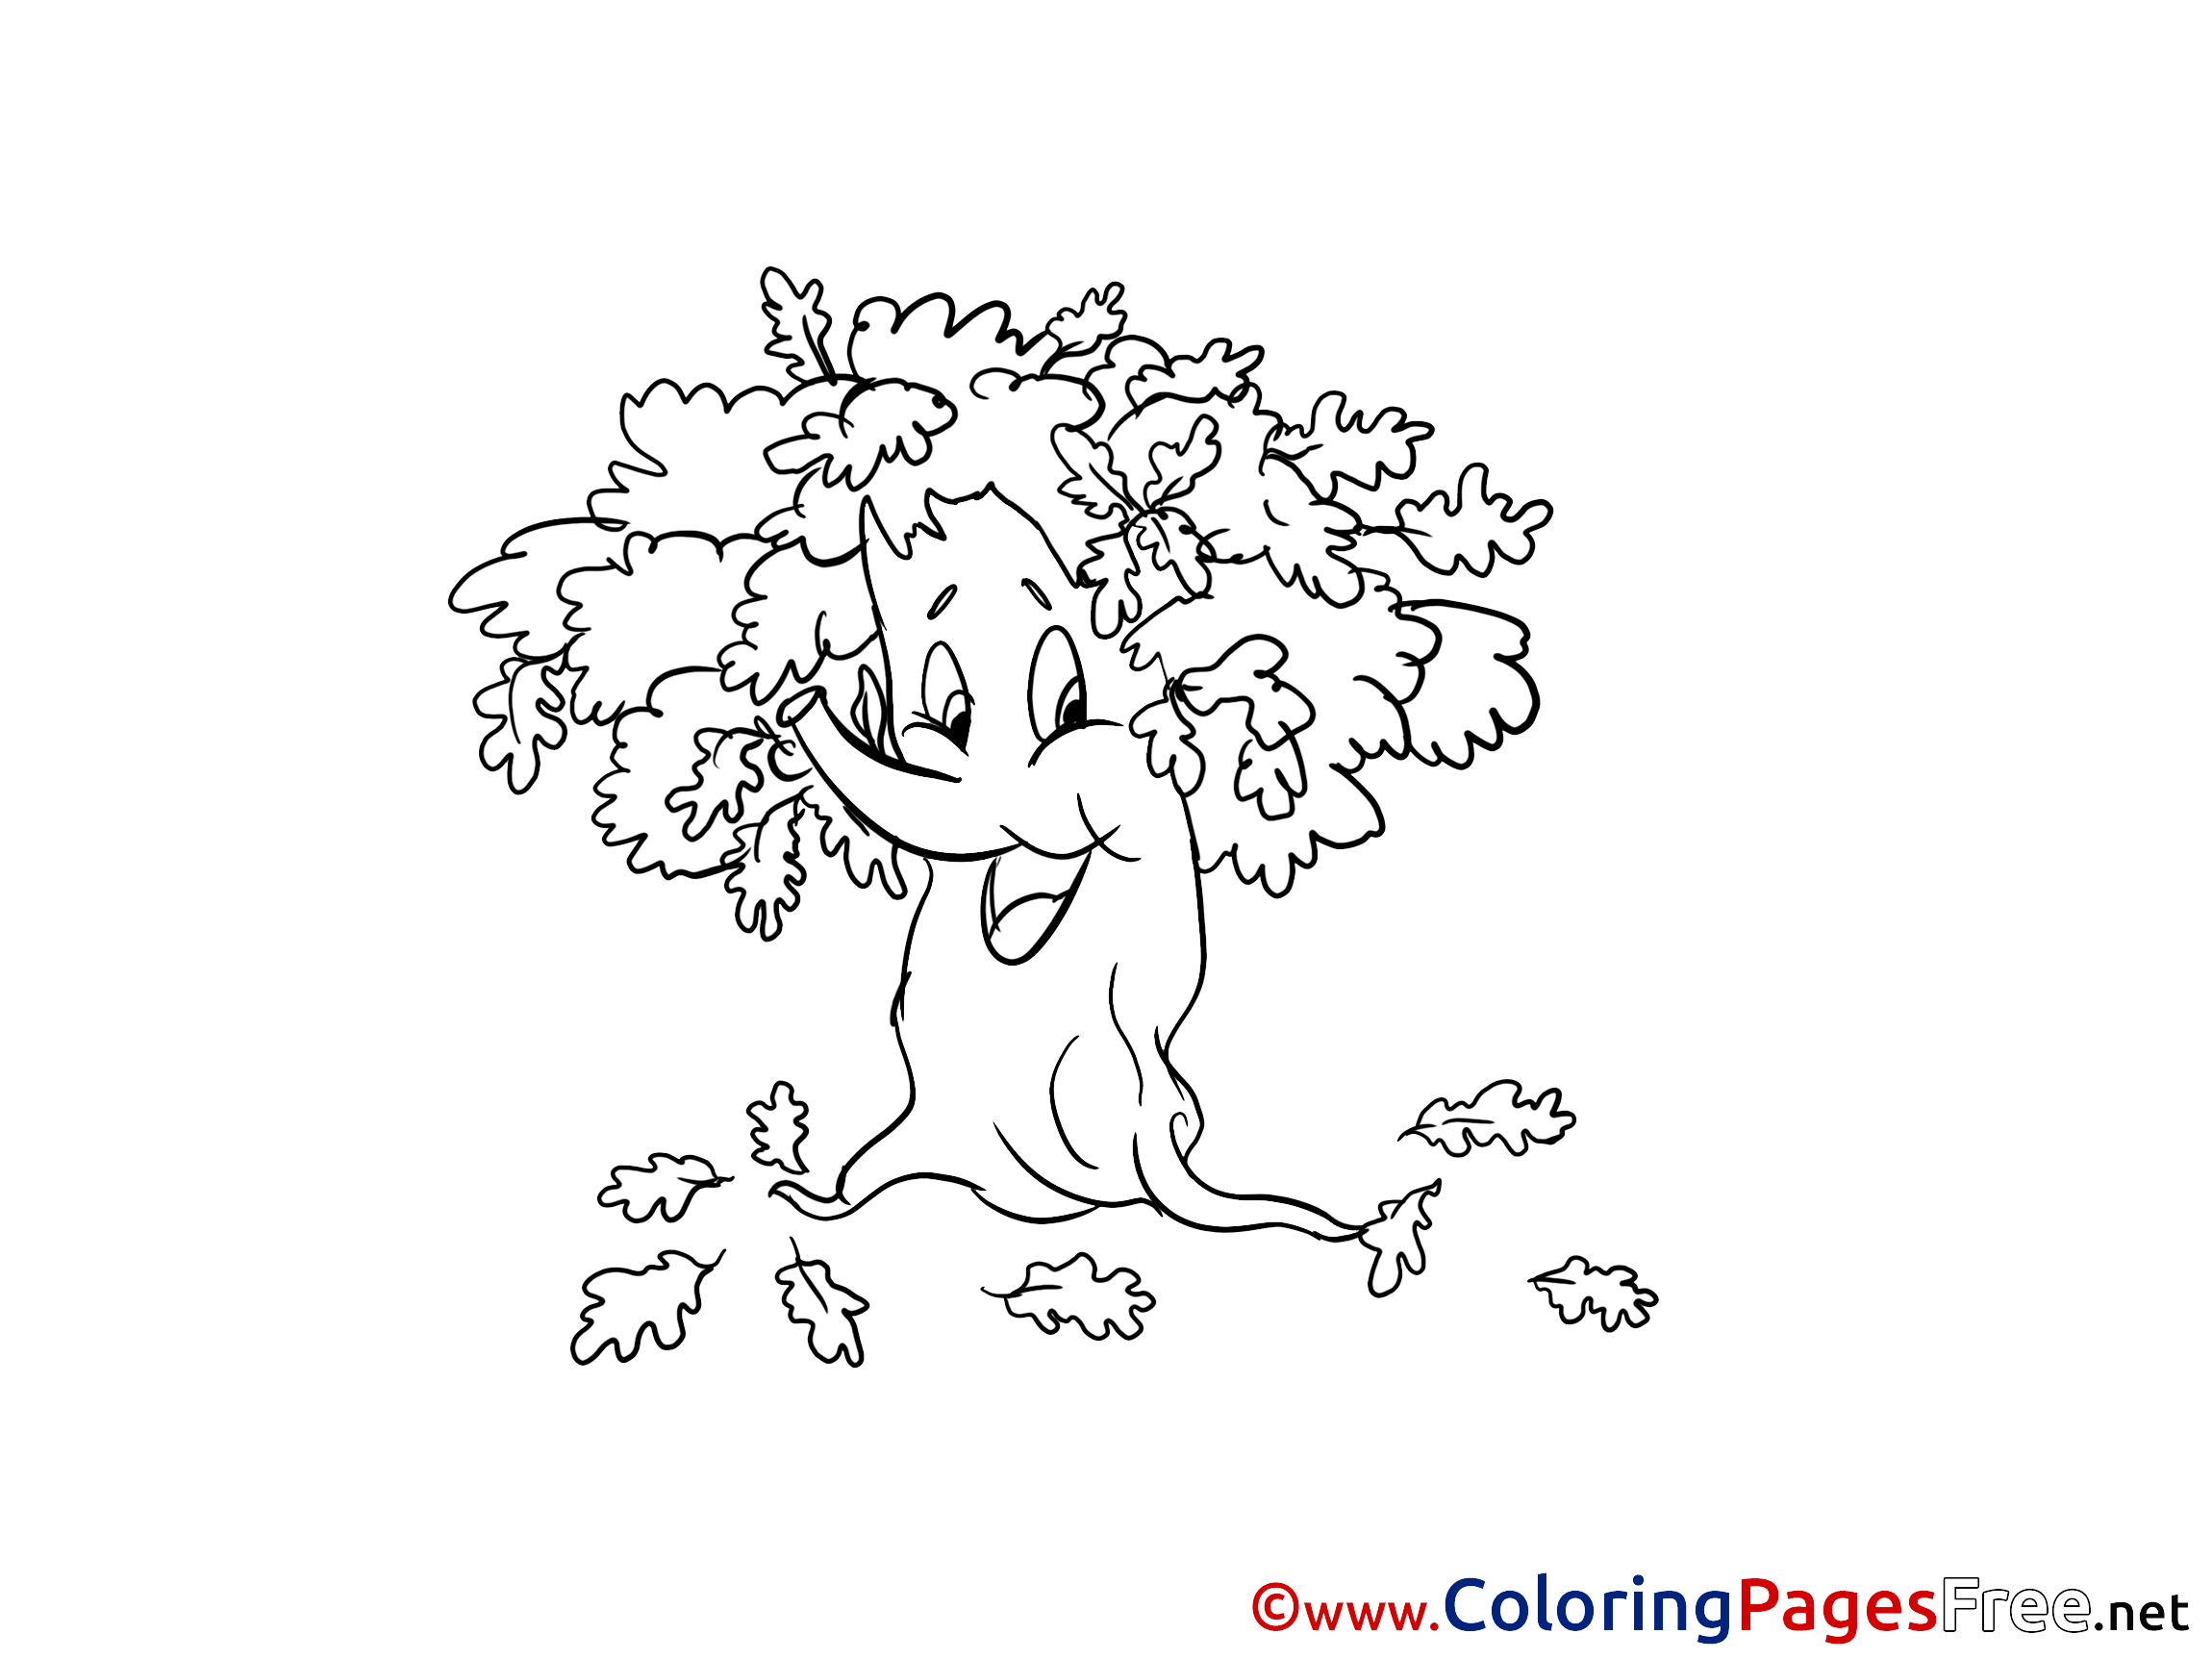 oak-colouring-page-printable-free